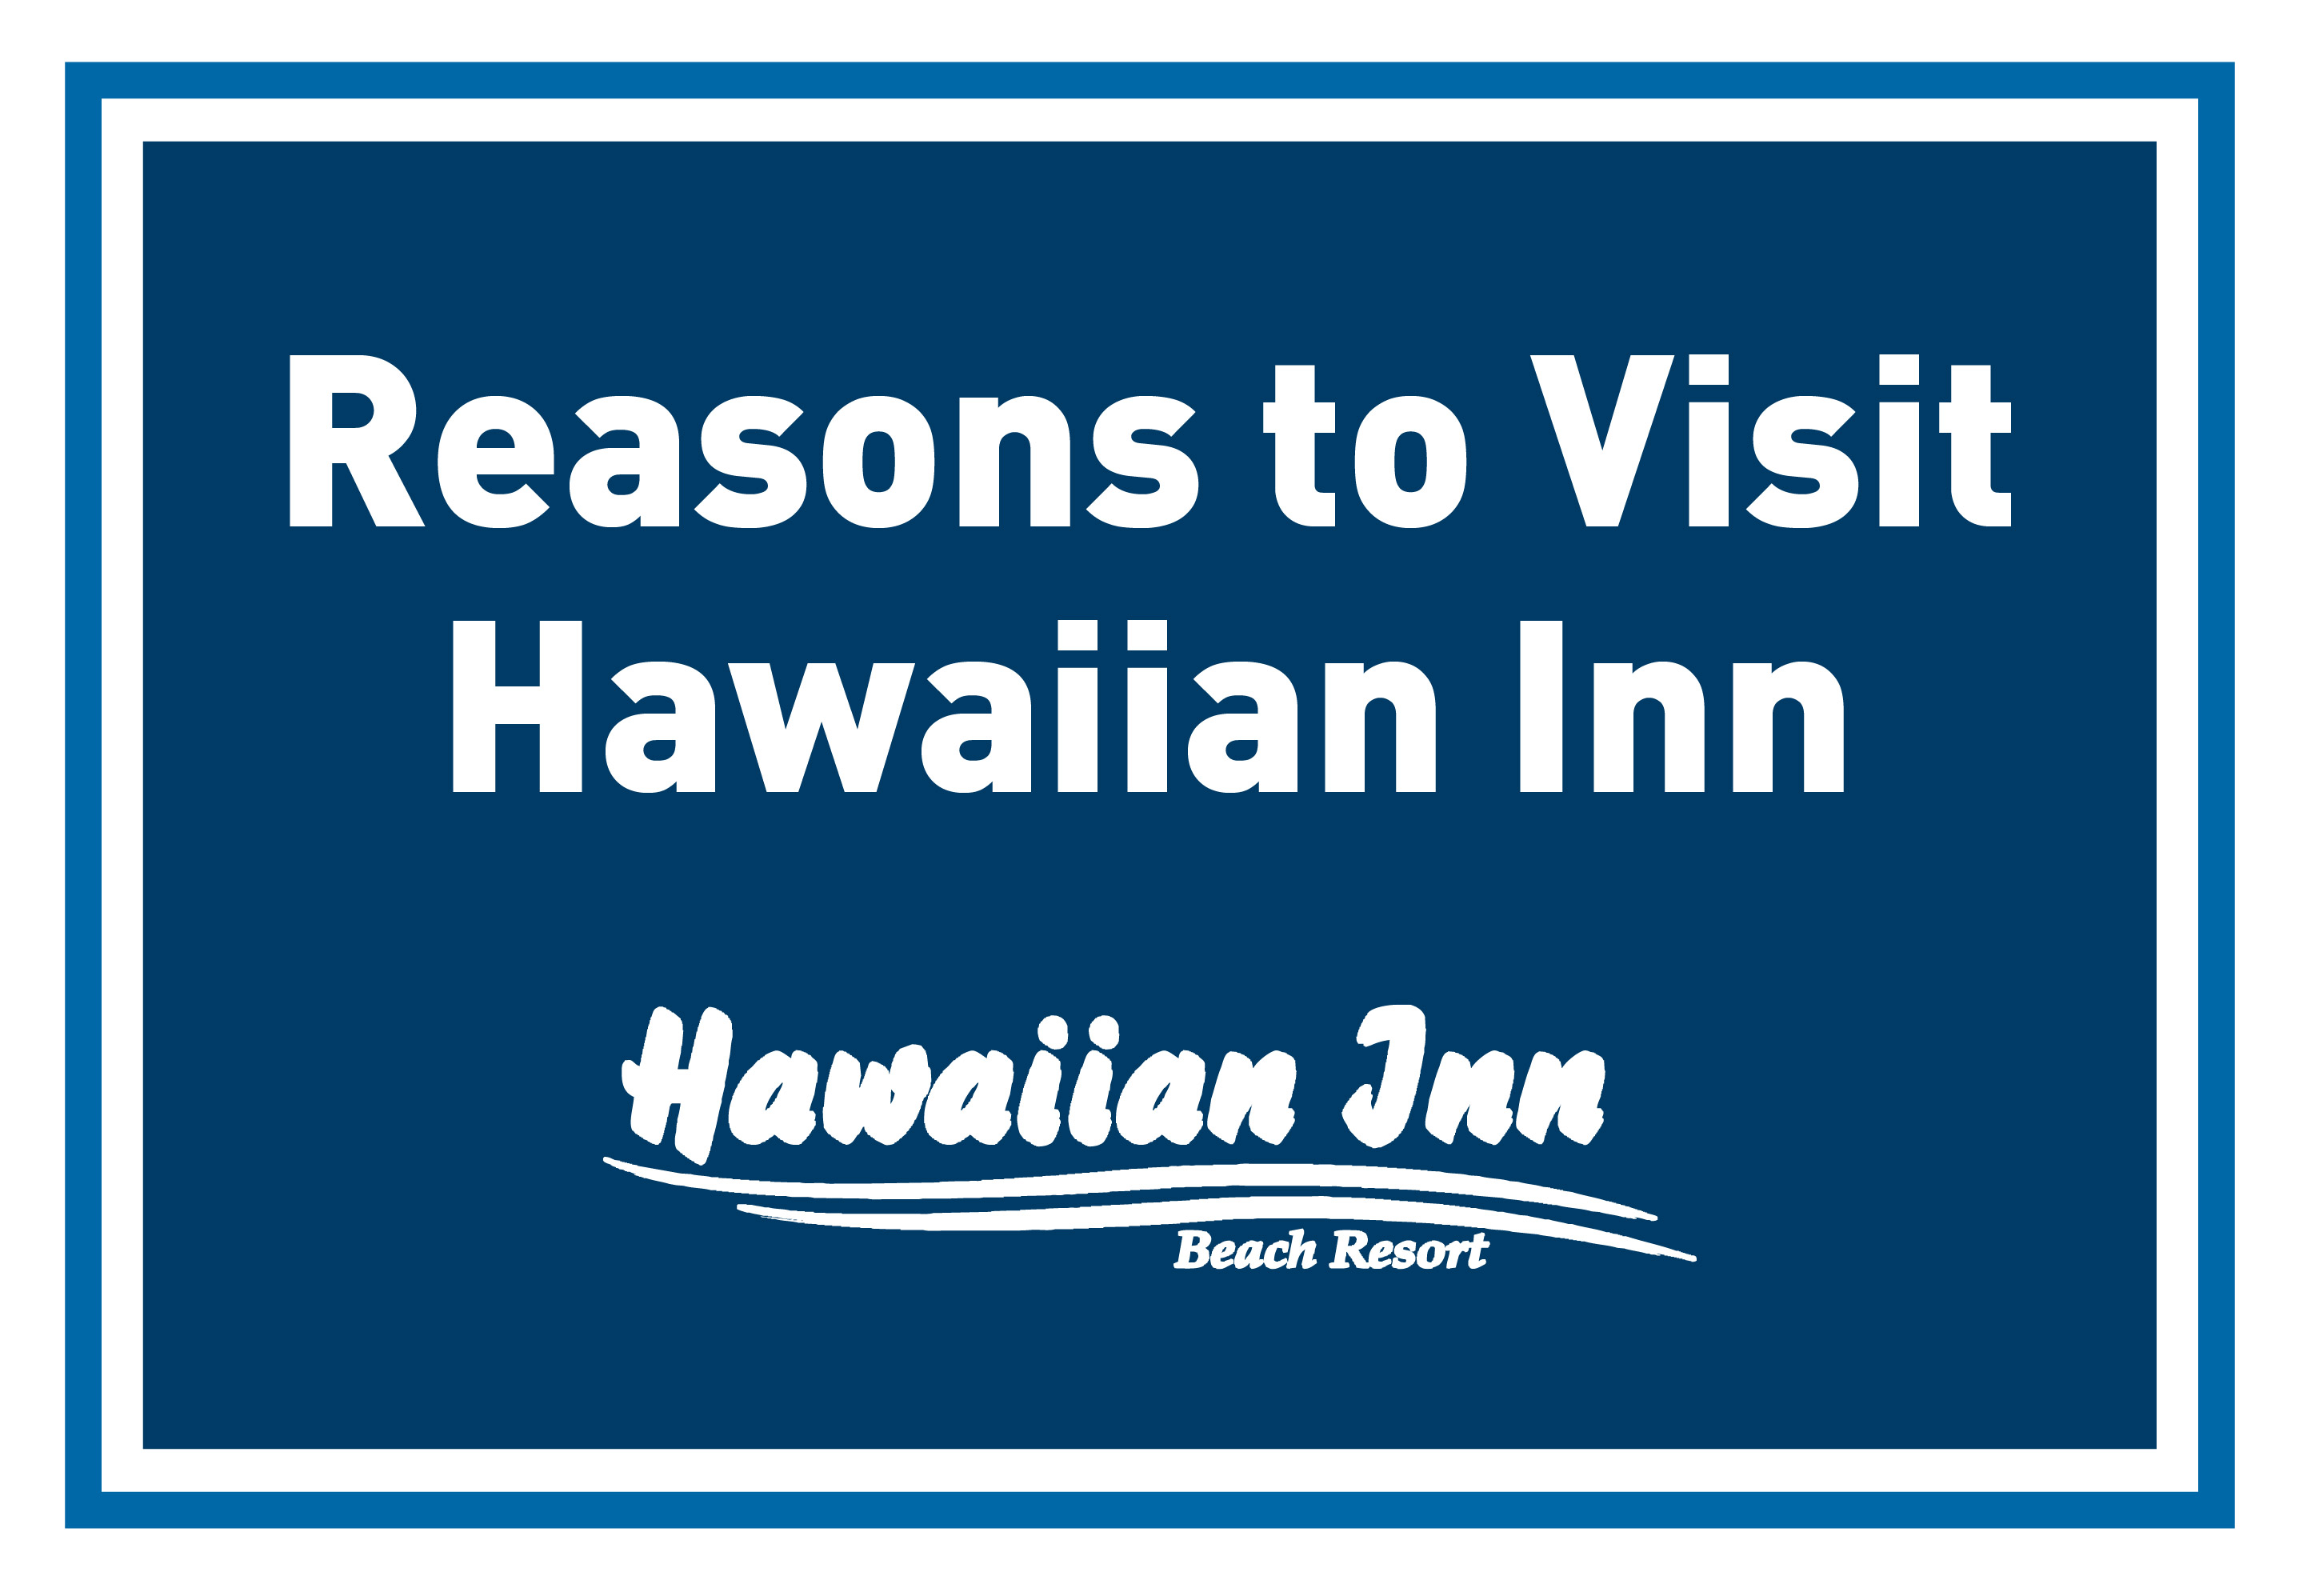 Reasons to Visit Hawaiian Inn on Your Next Daytona Beach Vacation